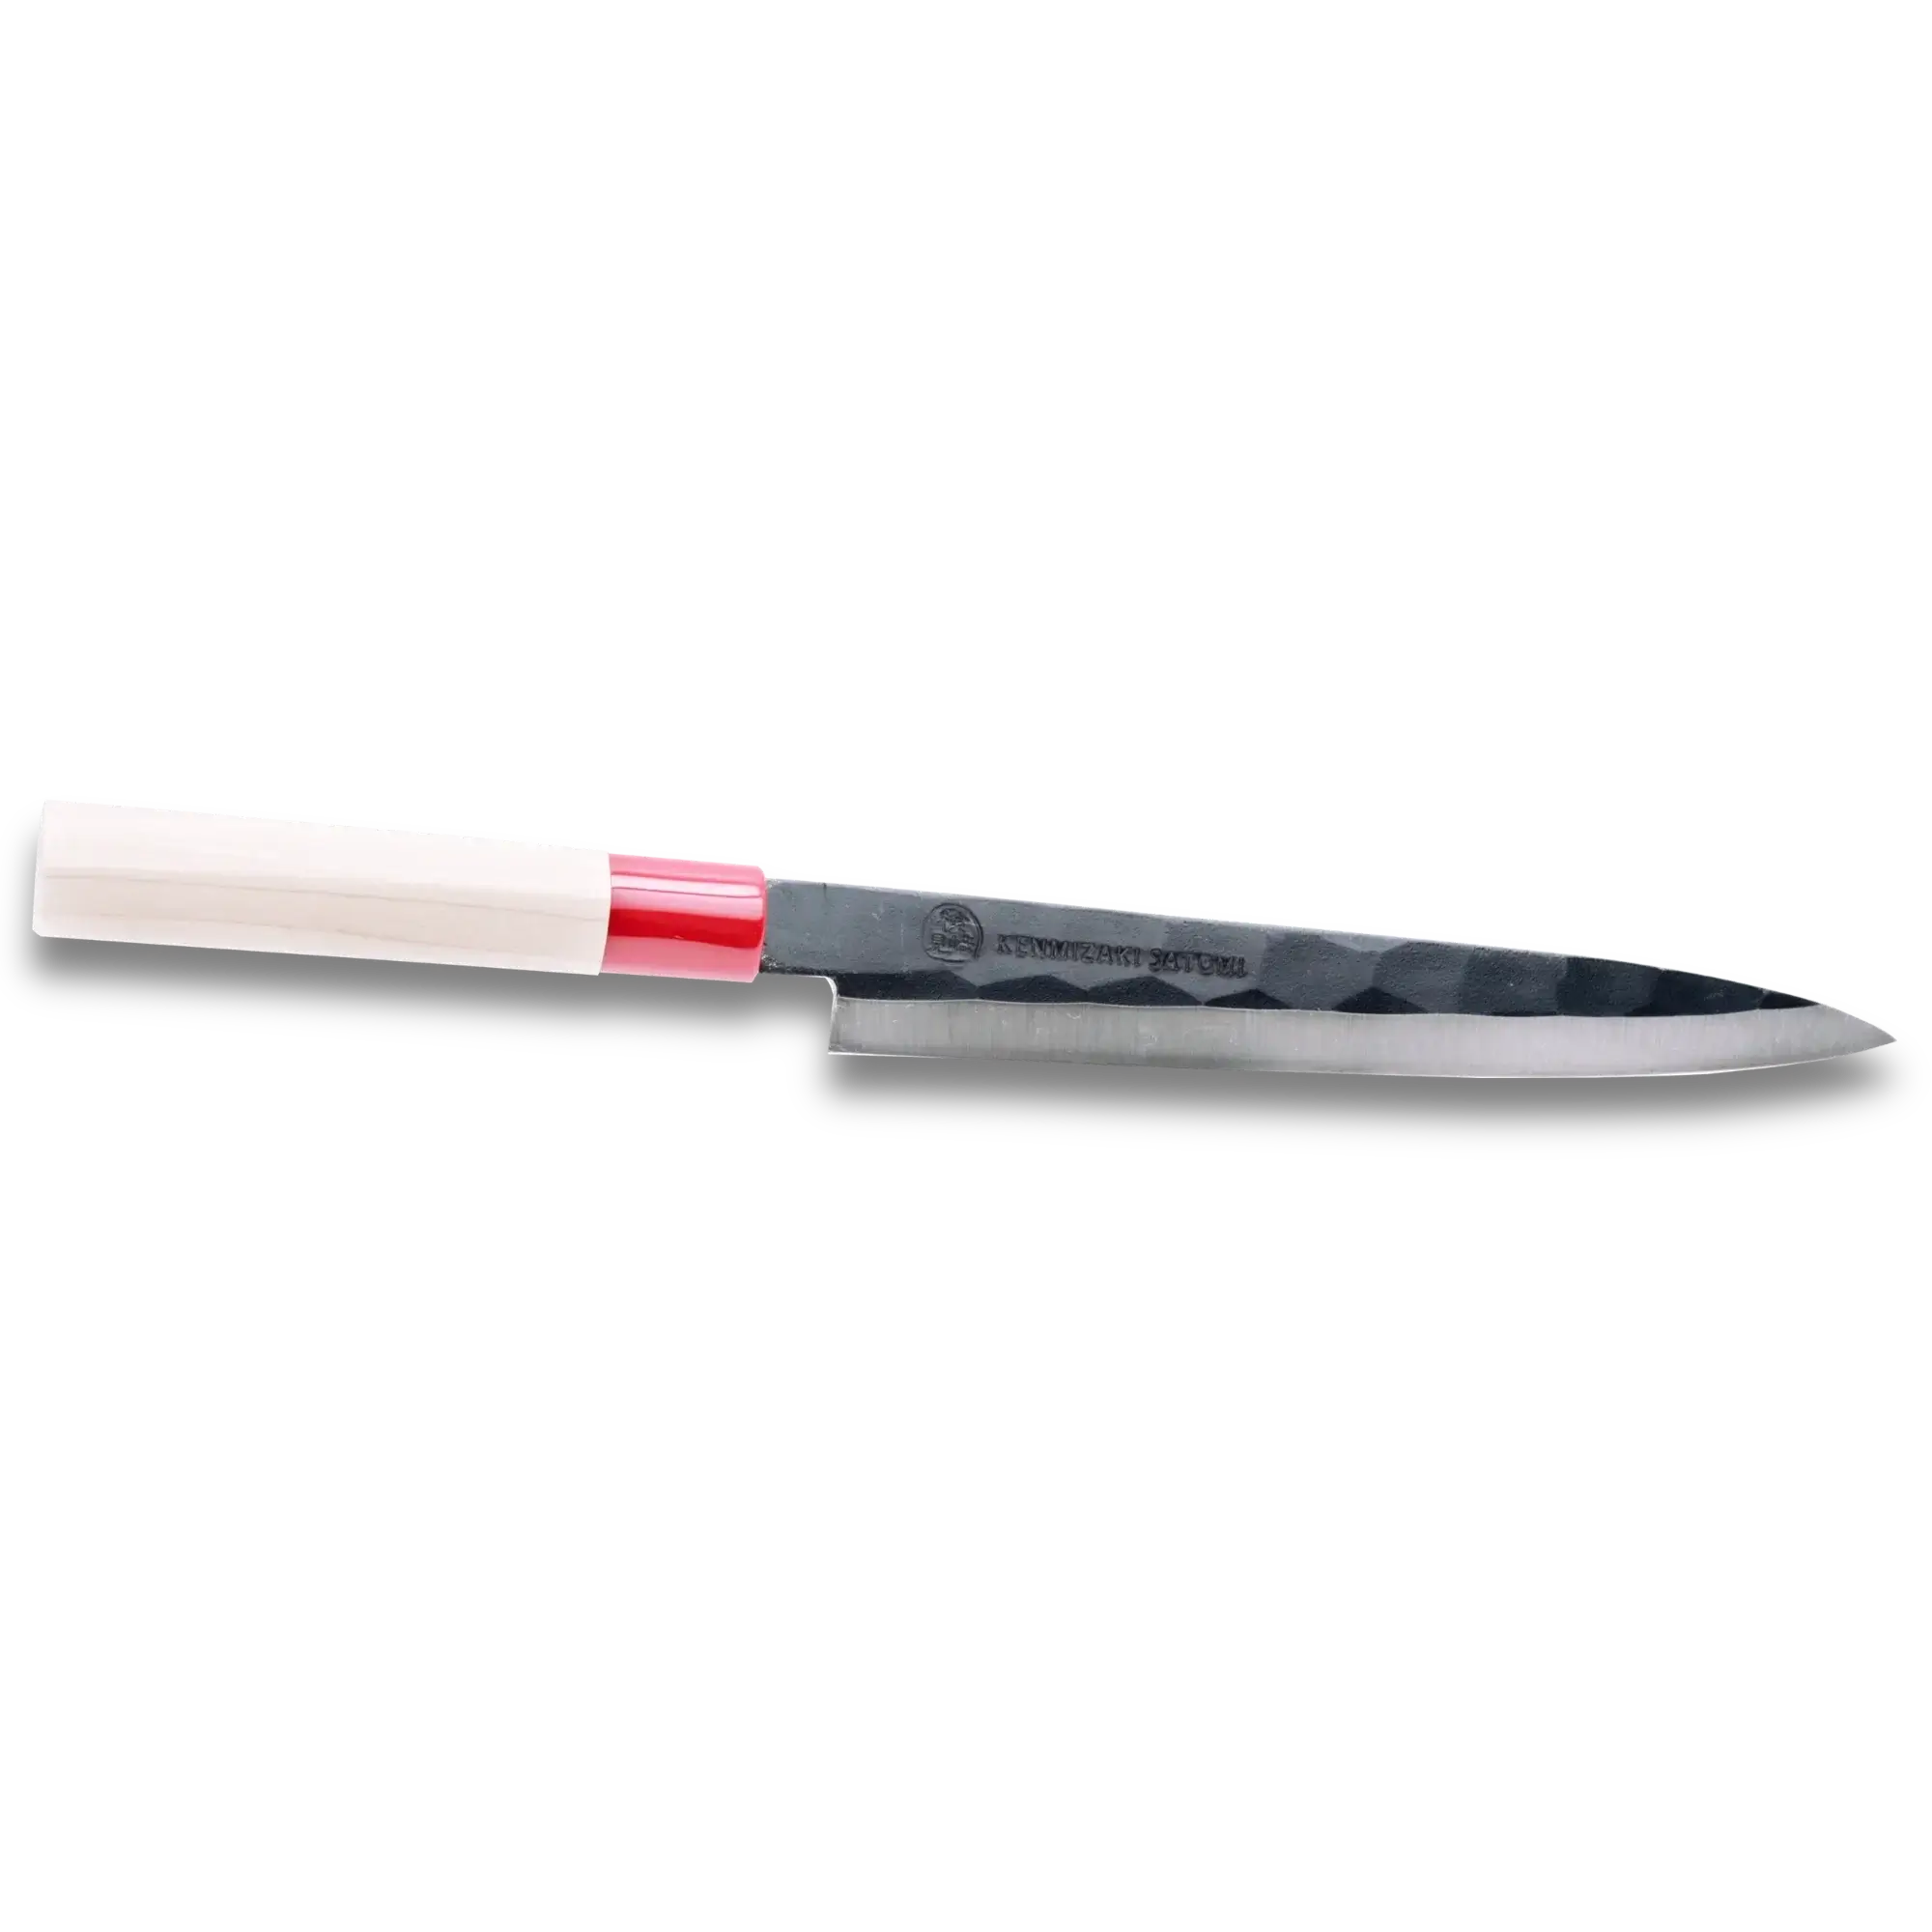 Yanagiba Knife 210mm Right Hand | Made in Japan